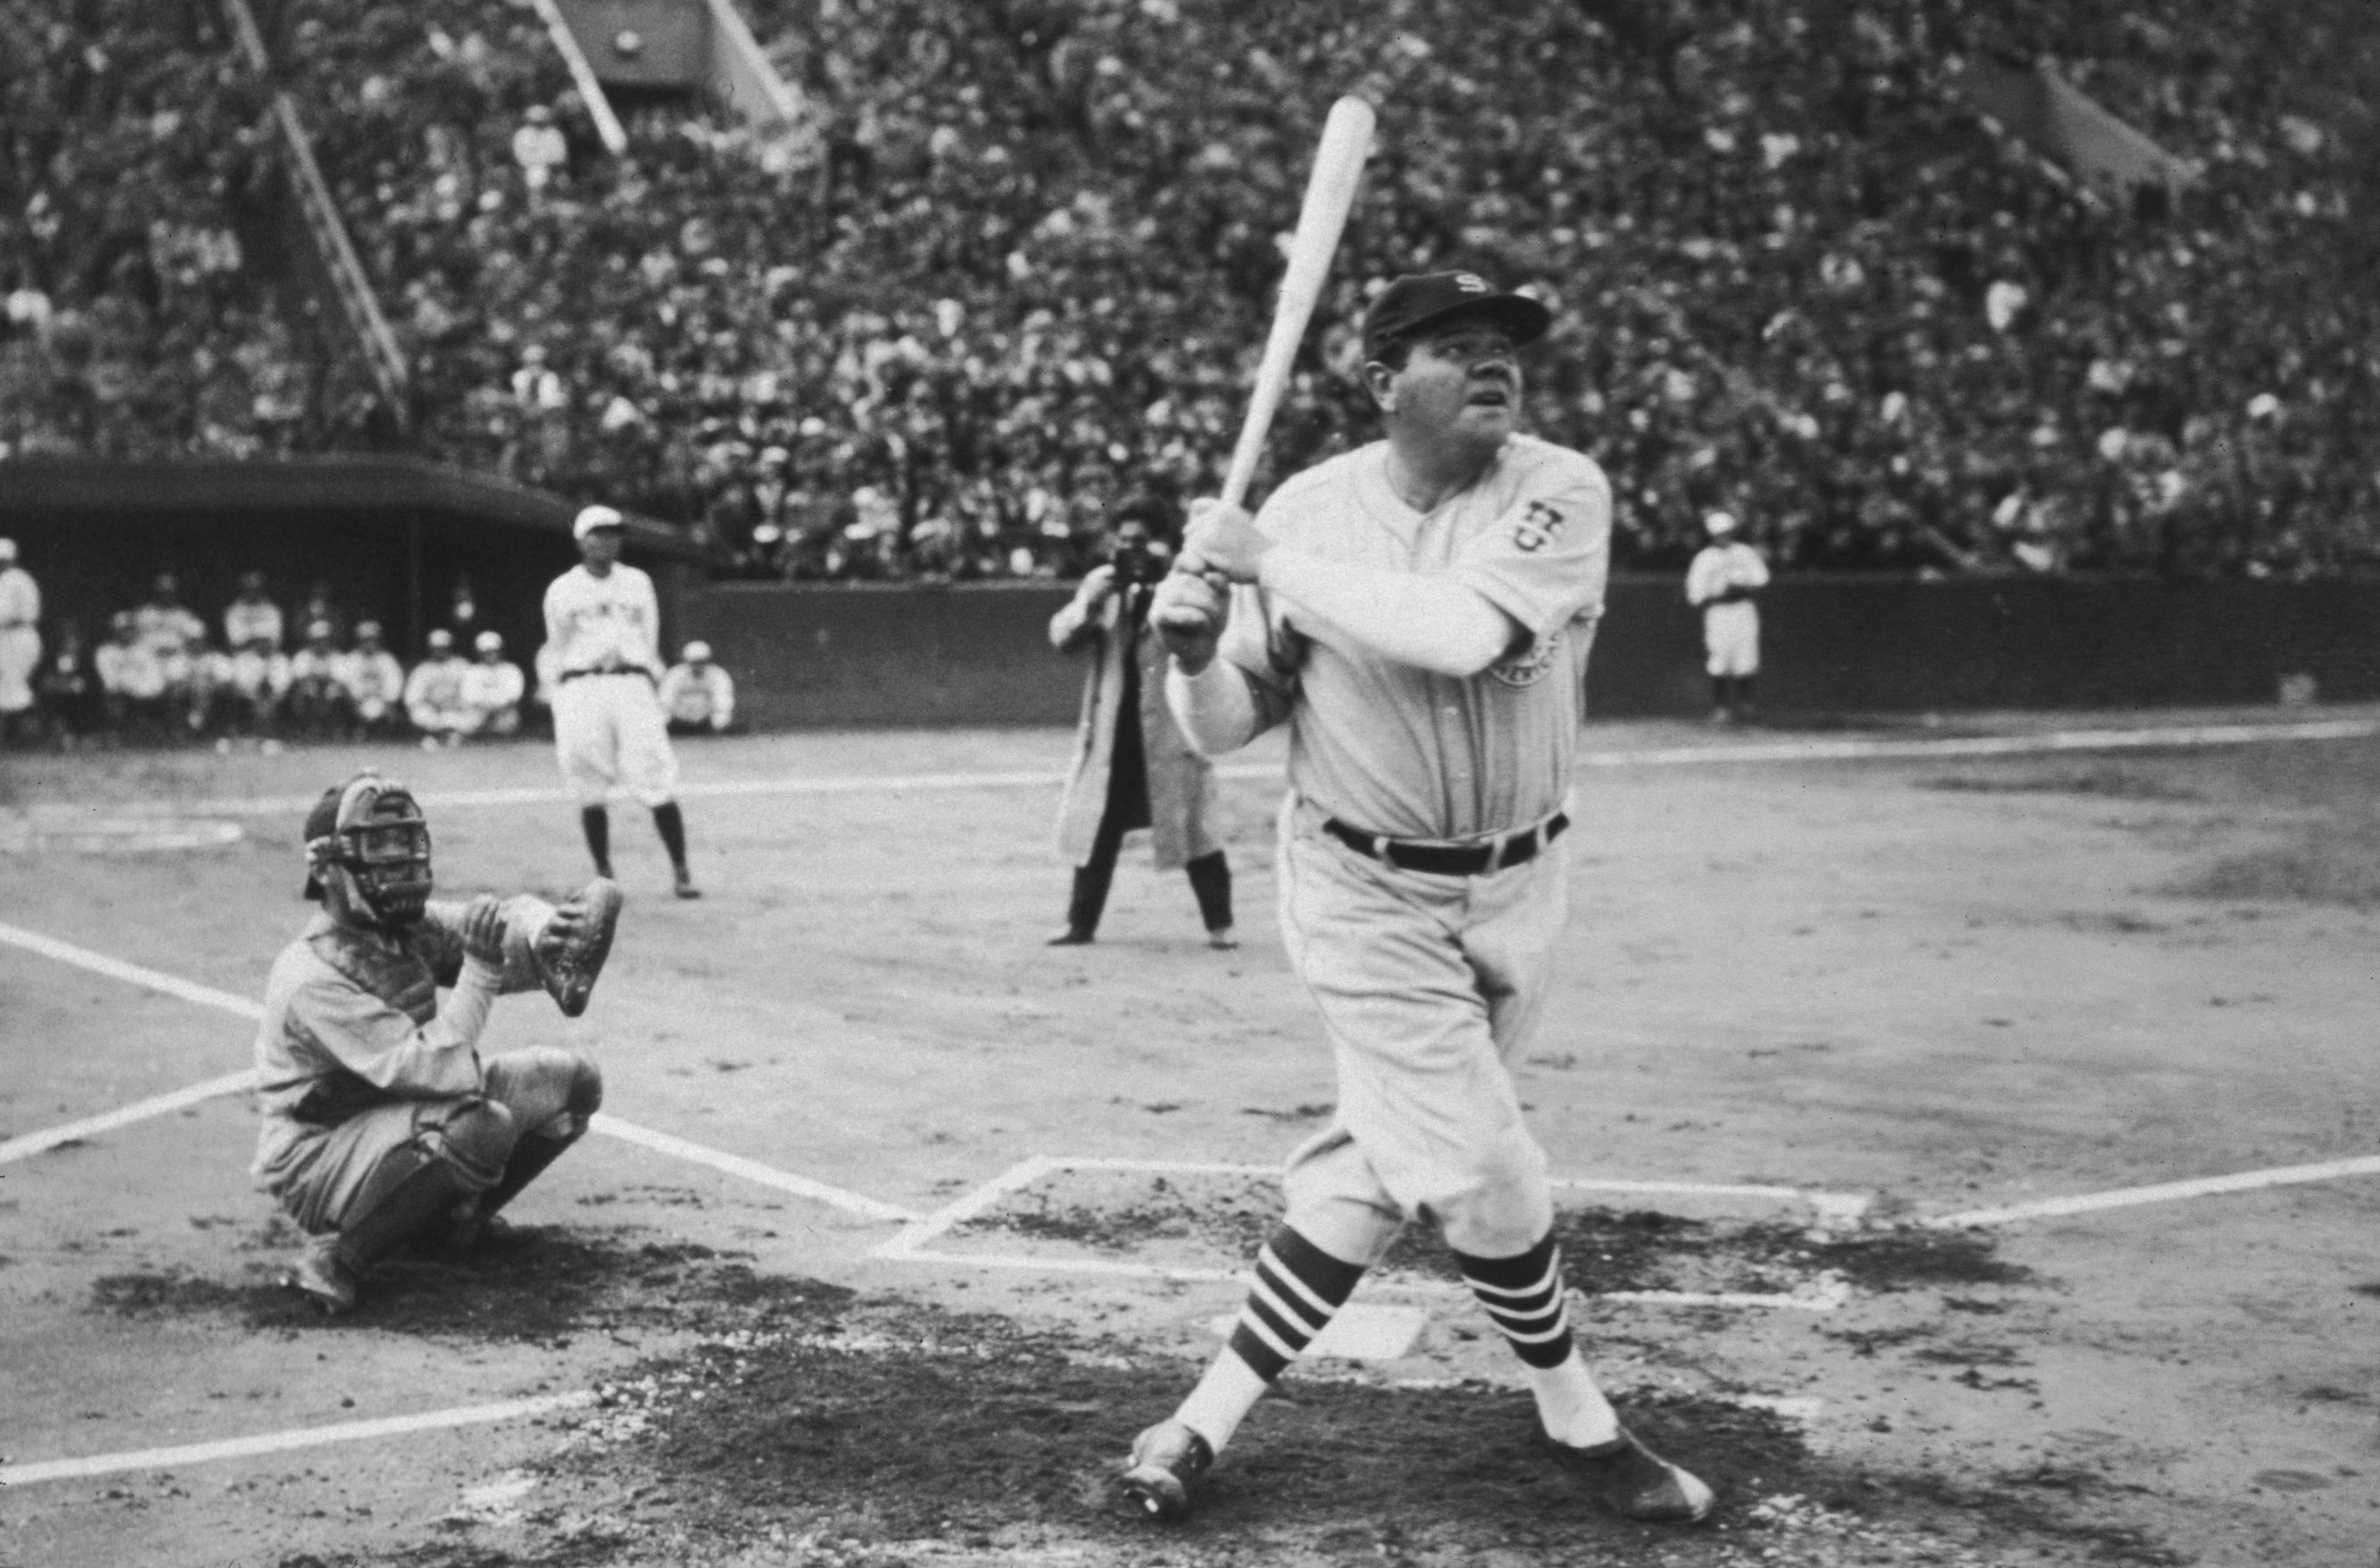 George Brett Autograph Ends up on a Babe Ruth Baseball Card